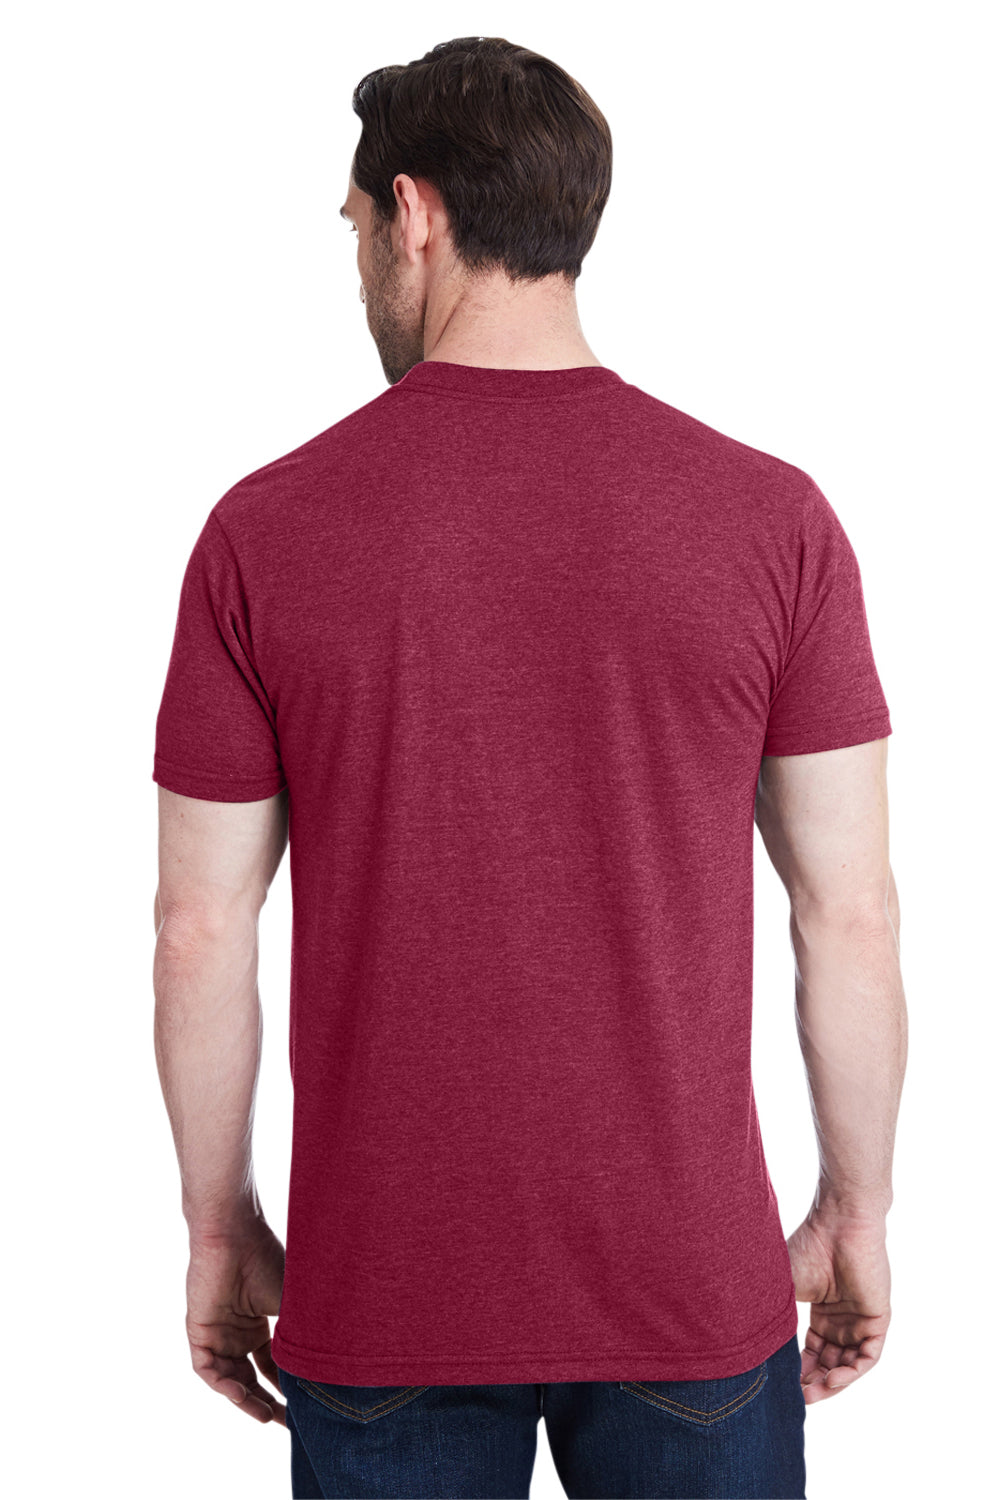 Bayside 5710 Mens USA Made Short Sleeve Crewneck T-Shirt Burgundy Model Back